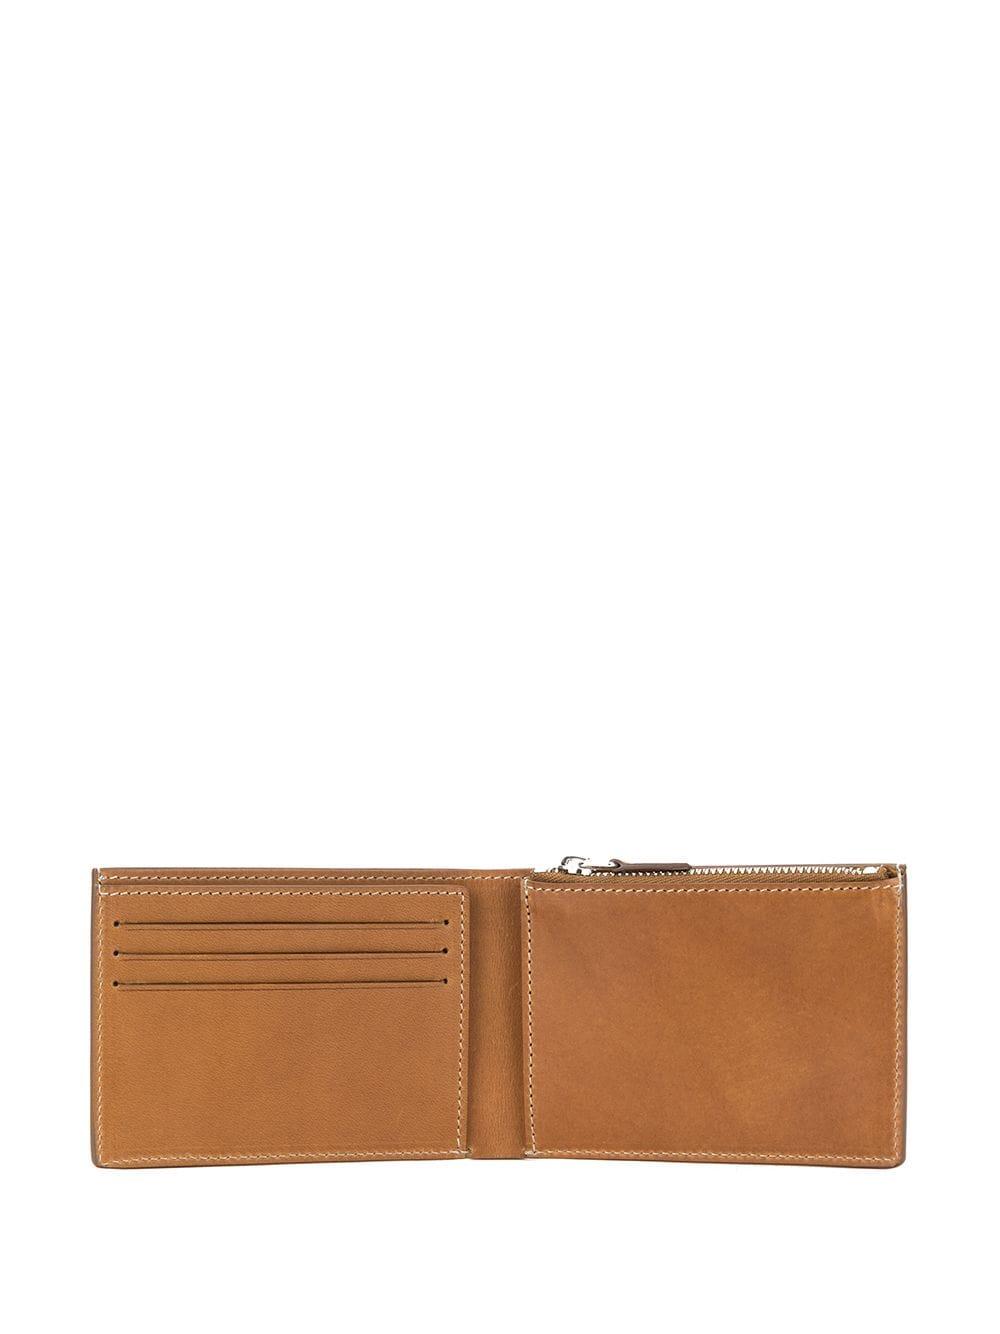 Jil Sander Zip Pocket Wallet in Brown for Men - Lyst